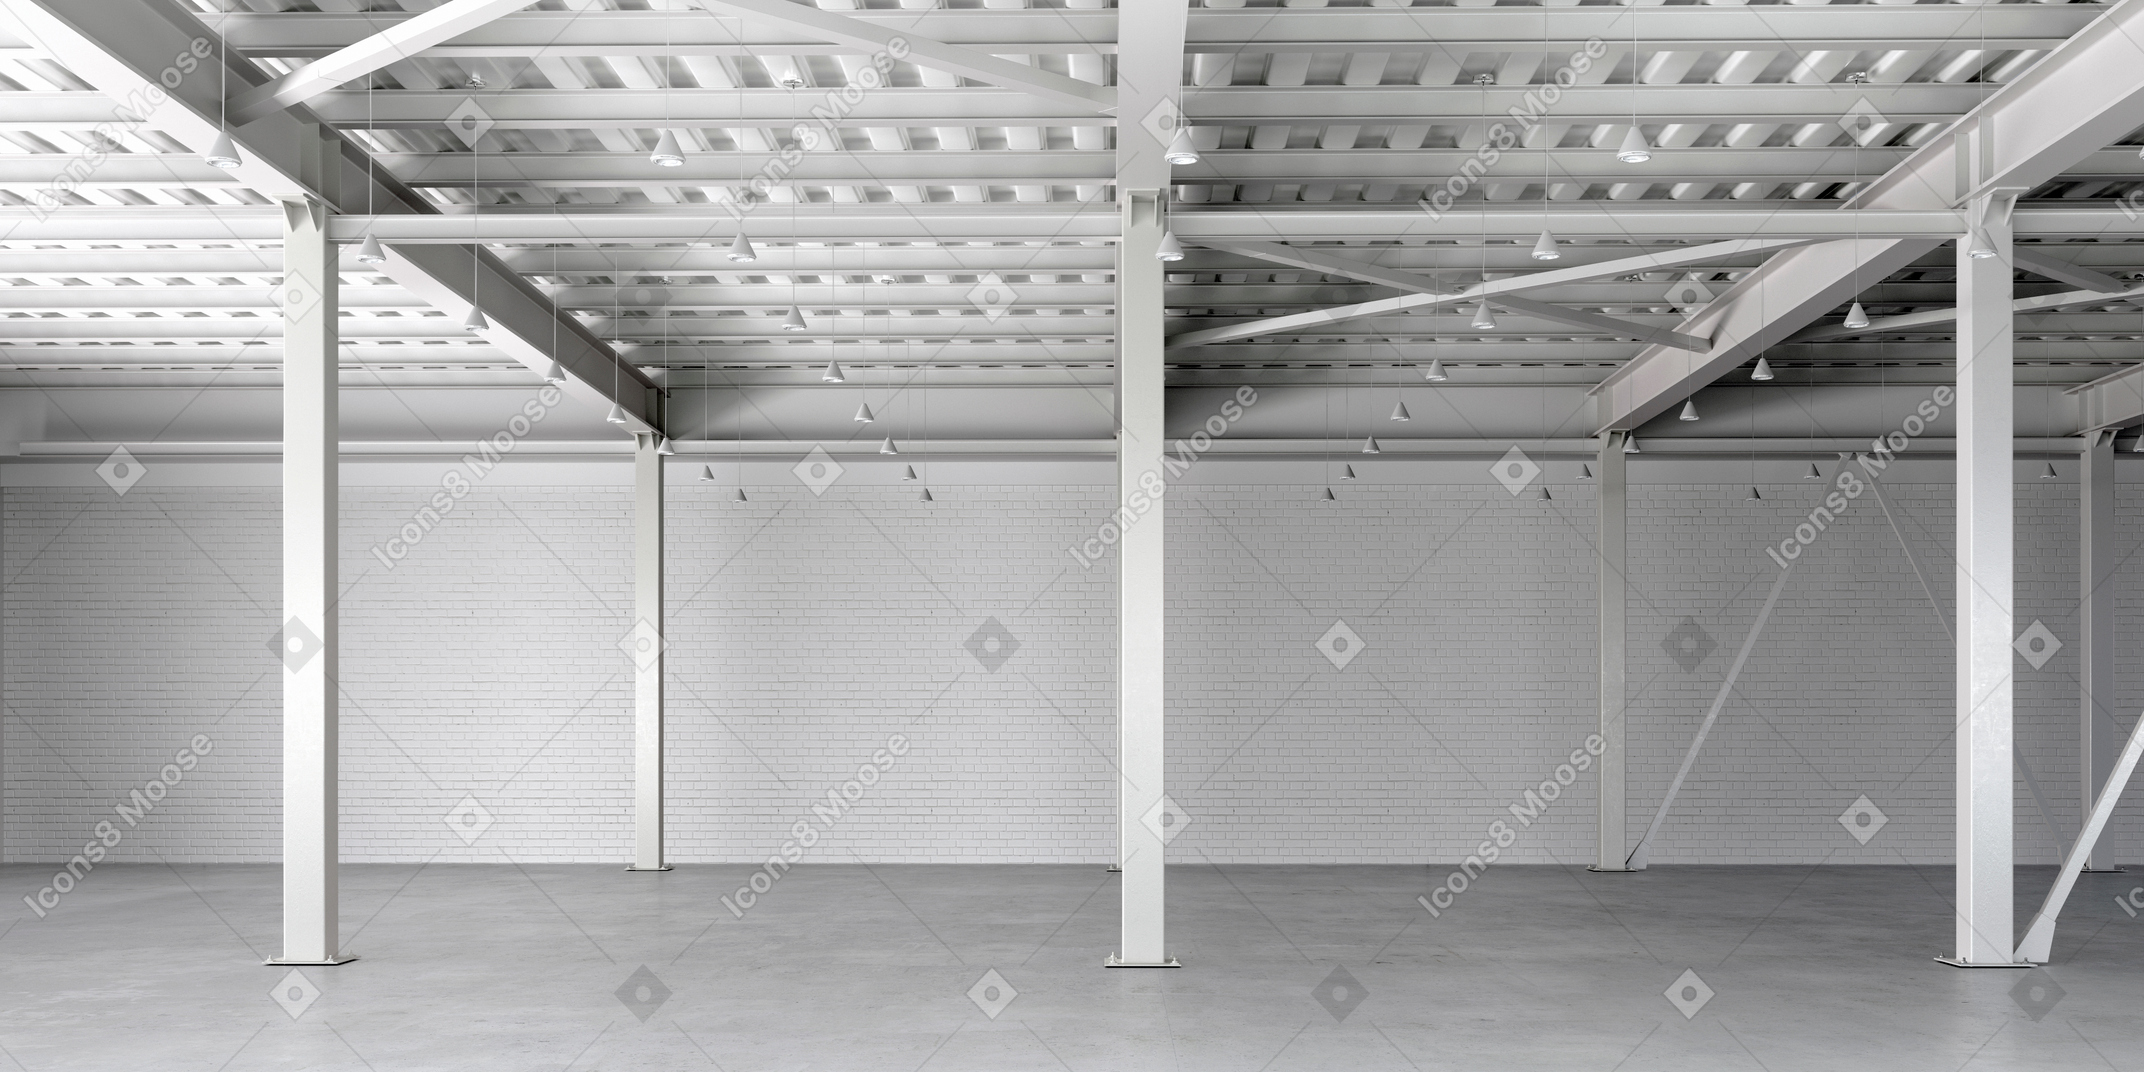 Empty garage with white support pillars